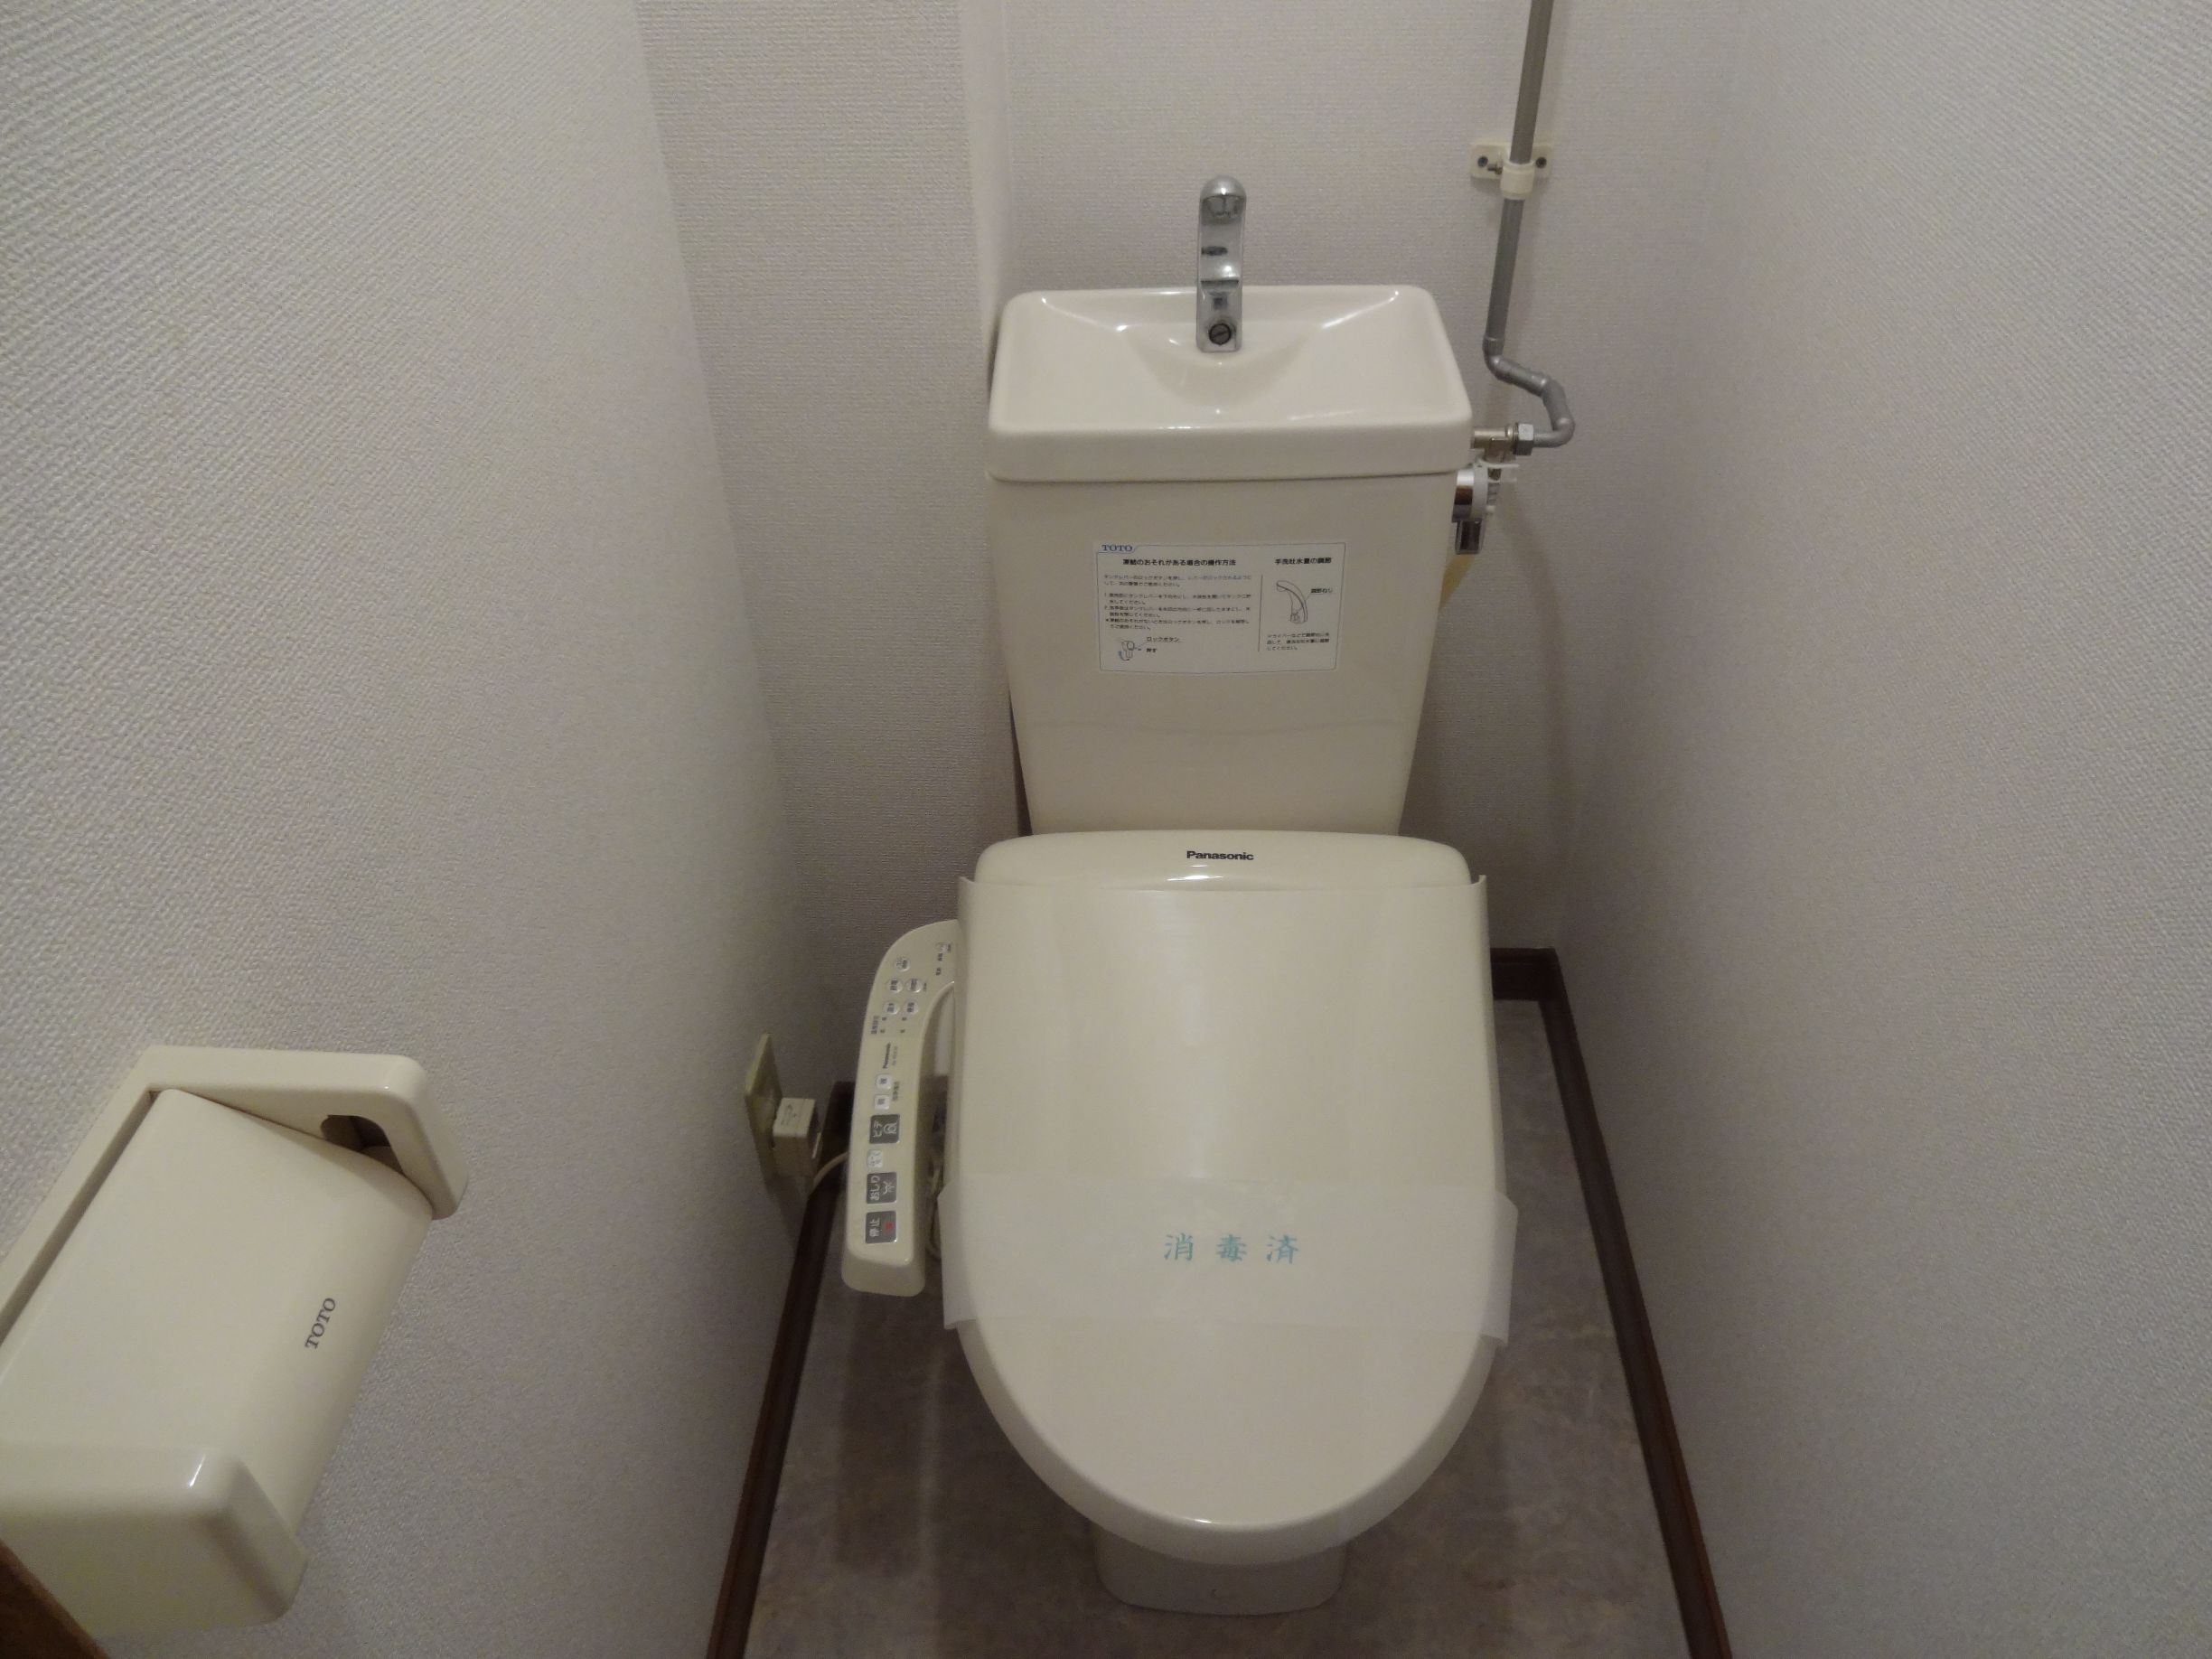 Toilet. Toilet bidet with a calm space! 